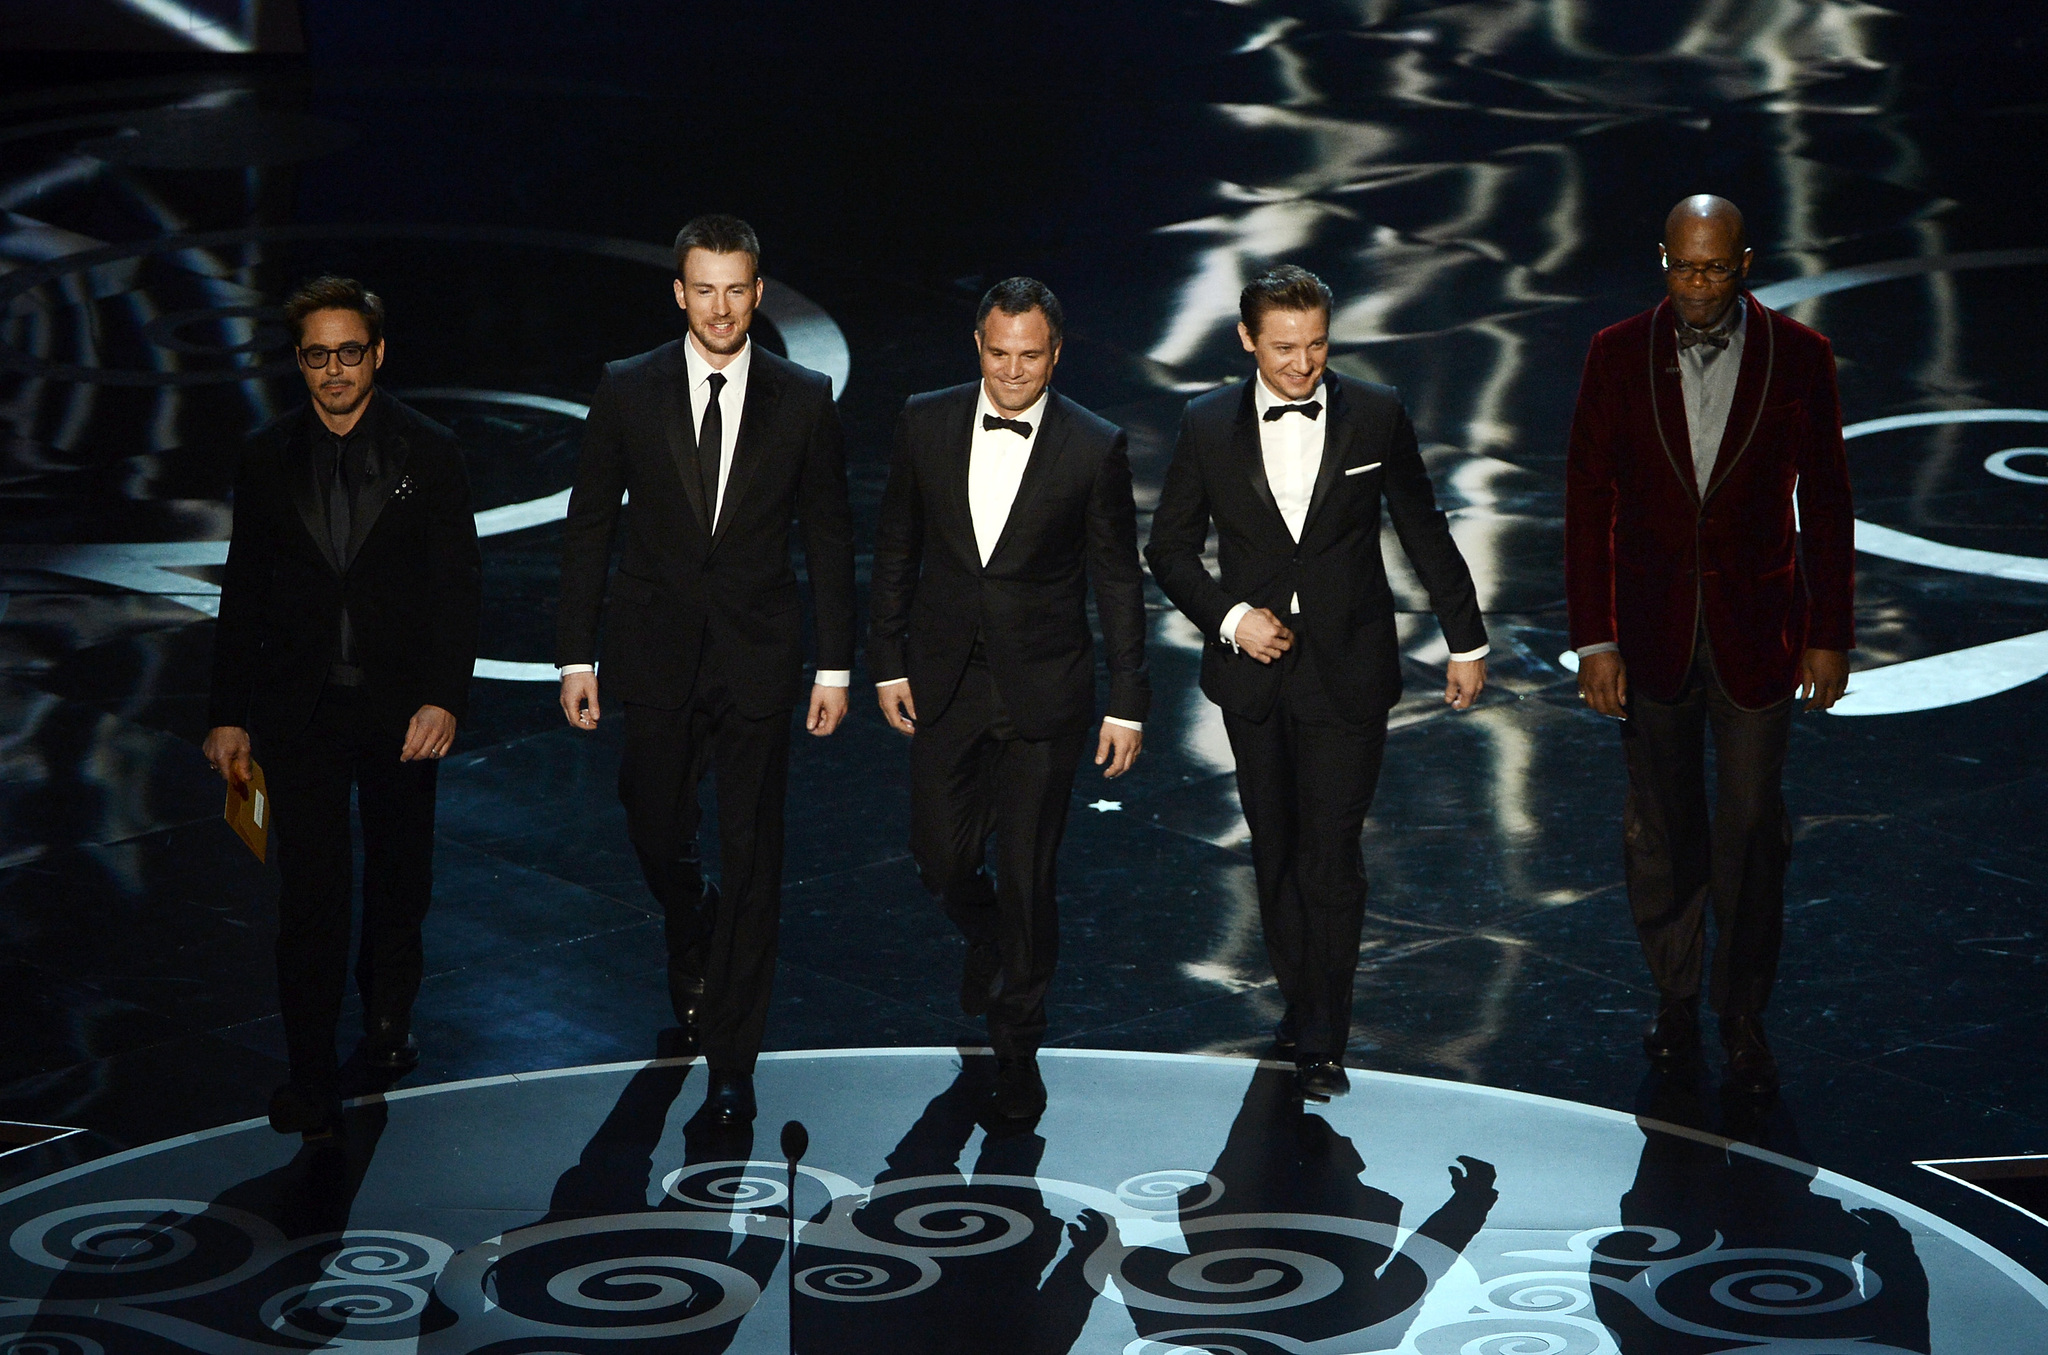 Samuel L. Jackson, Robert Downey Jr., Chris Evans, Jeremy Renner and Mark Ruffalo at event of The Oscars (2013)